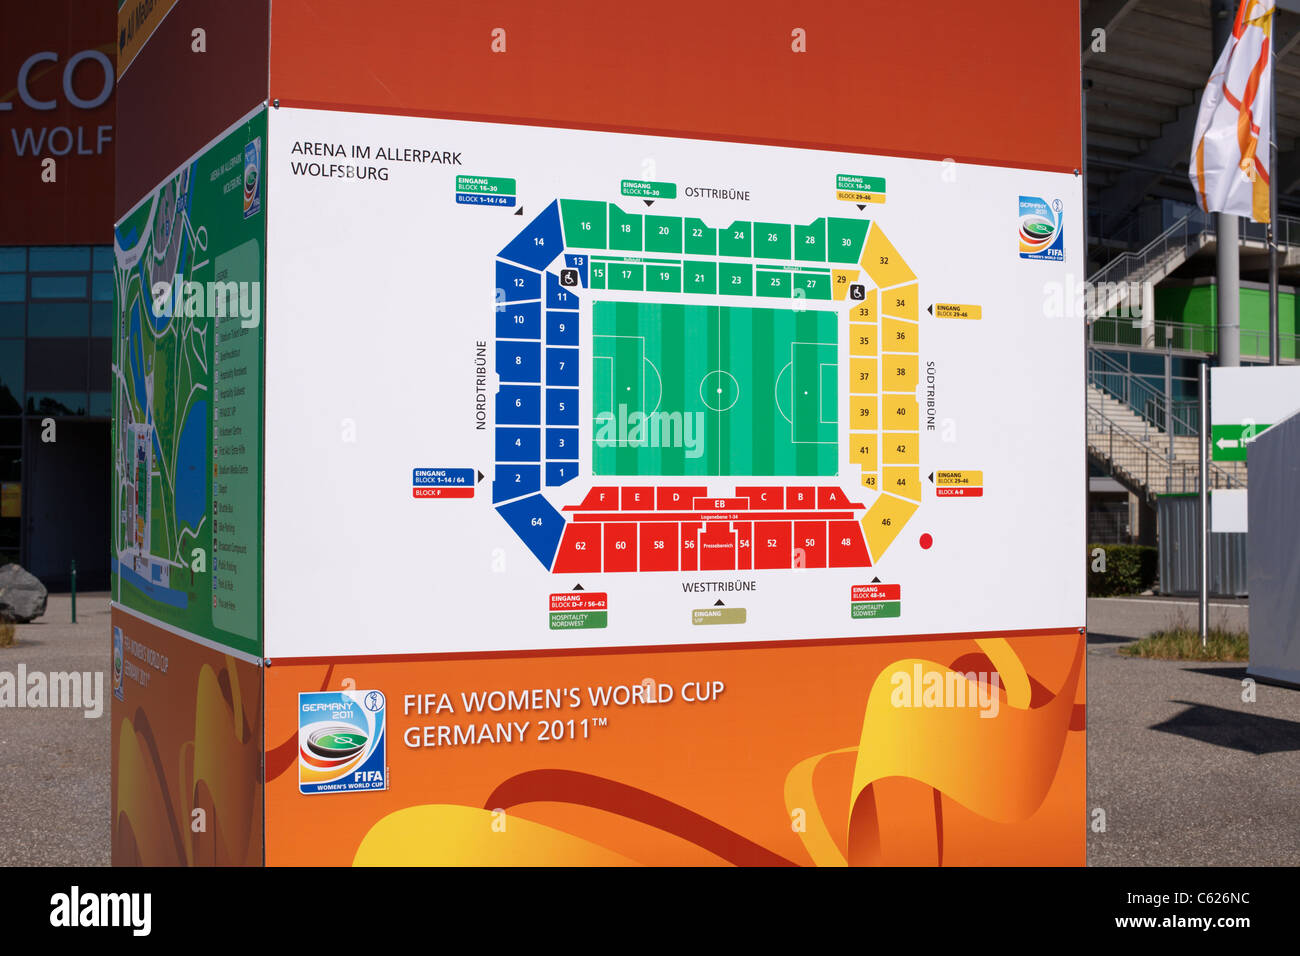 Fnb Stadium Seating Chart